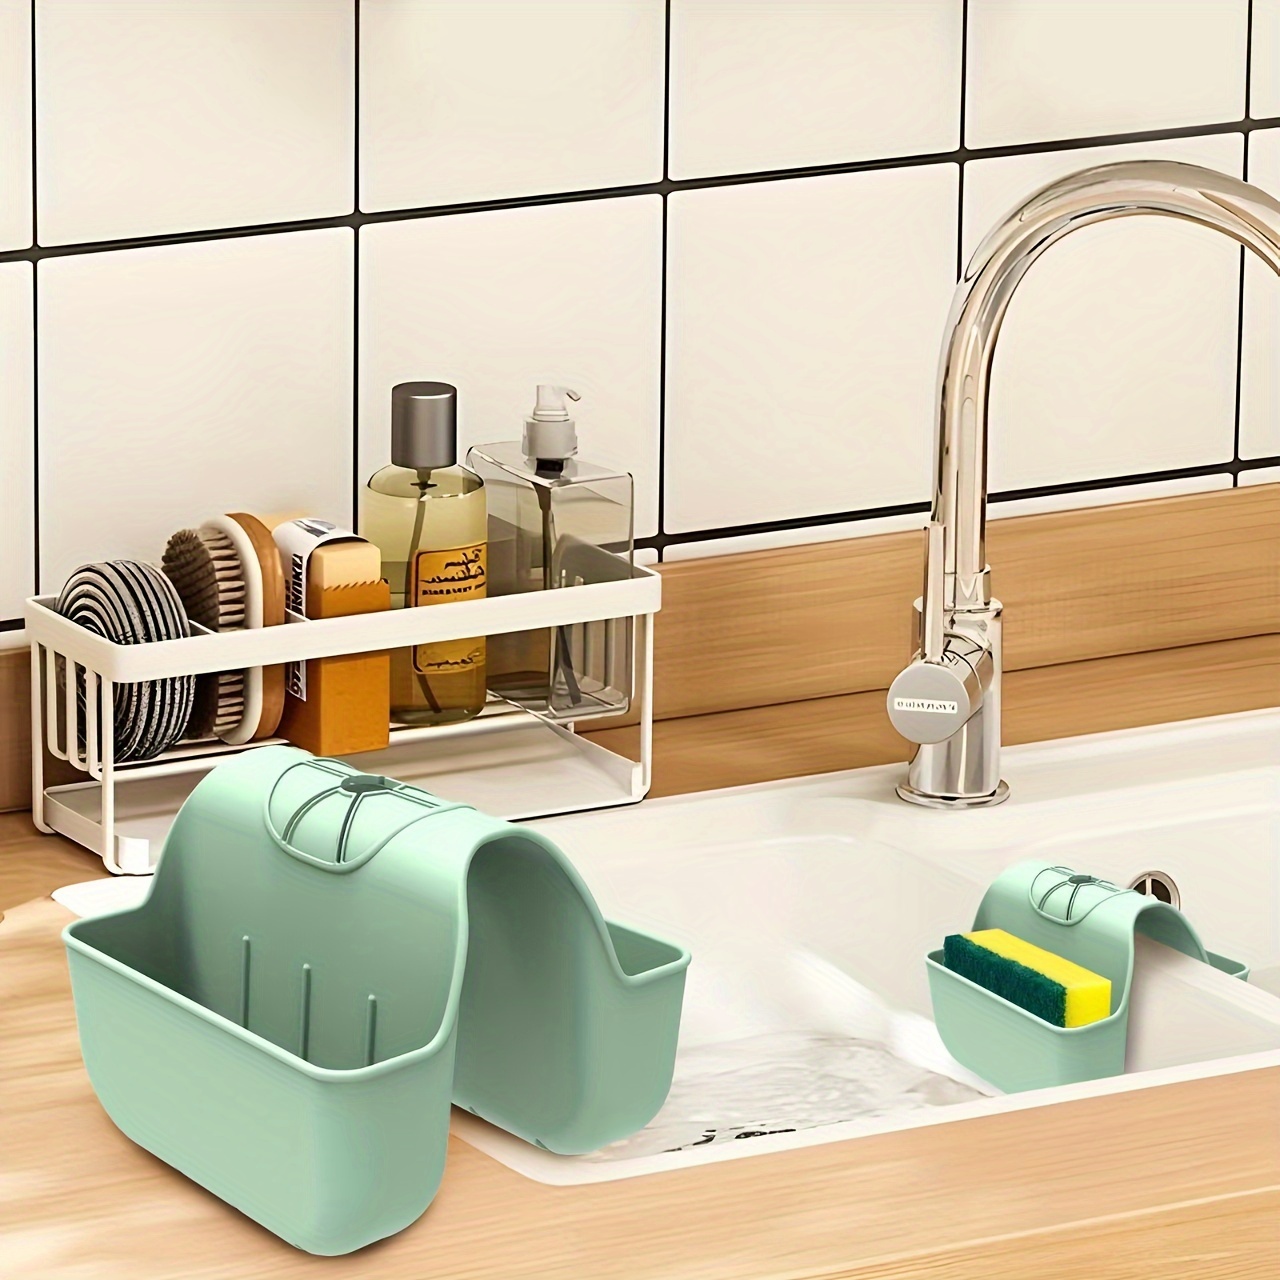 Aouton Sponge Holder for Kitchen Sink, Expandable (16.7-21.3) Sink Caddy  Sink